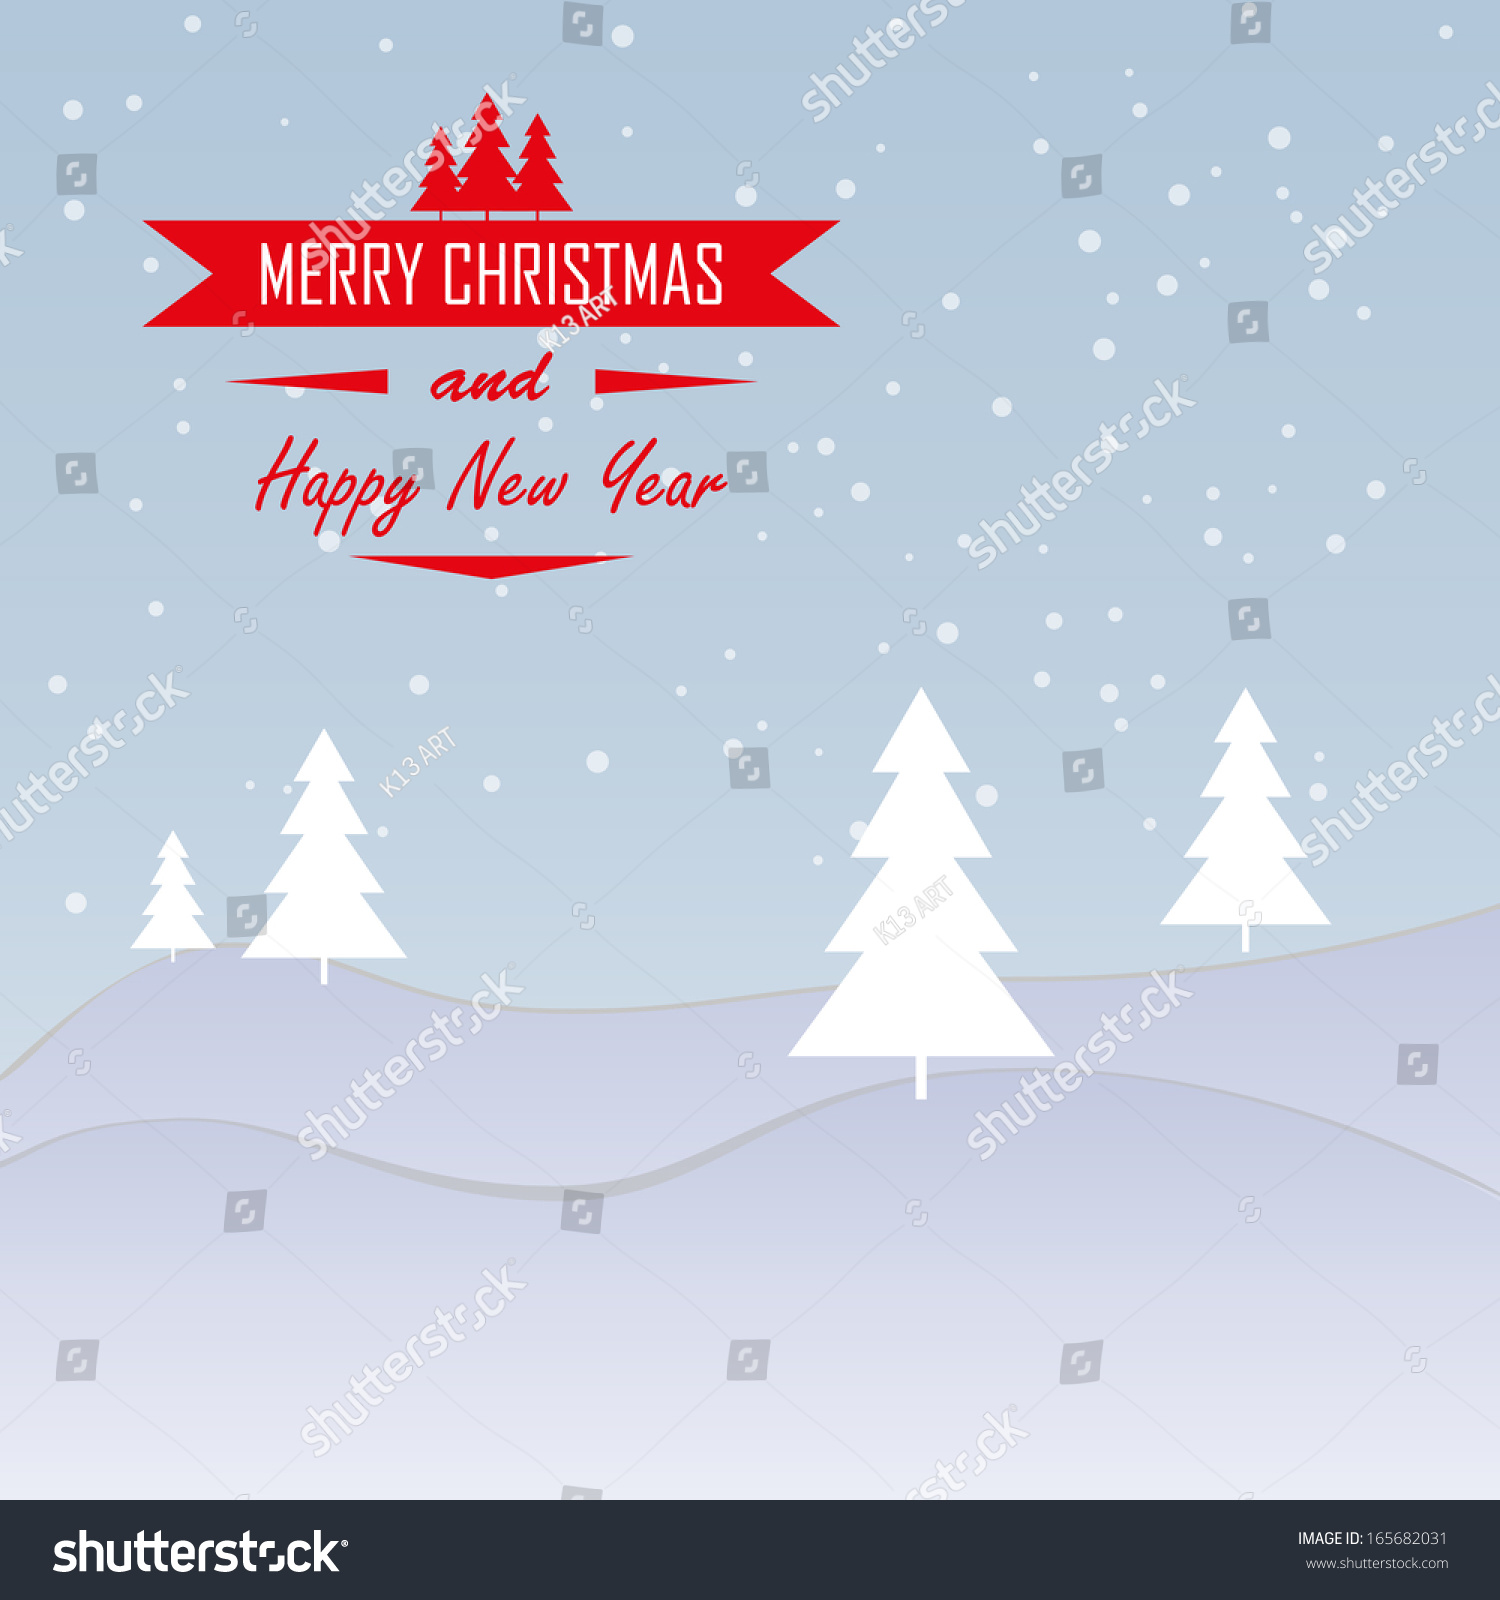 Merry Christmas Landscape - Vector - 165682031 : Shutterstock